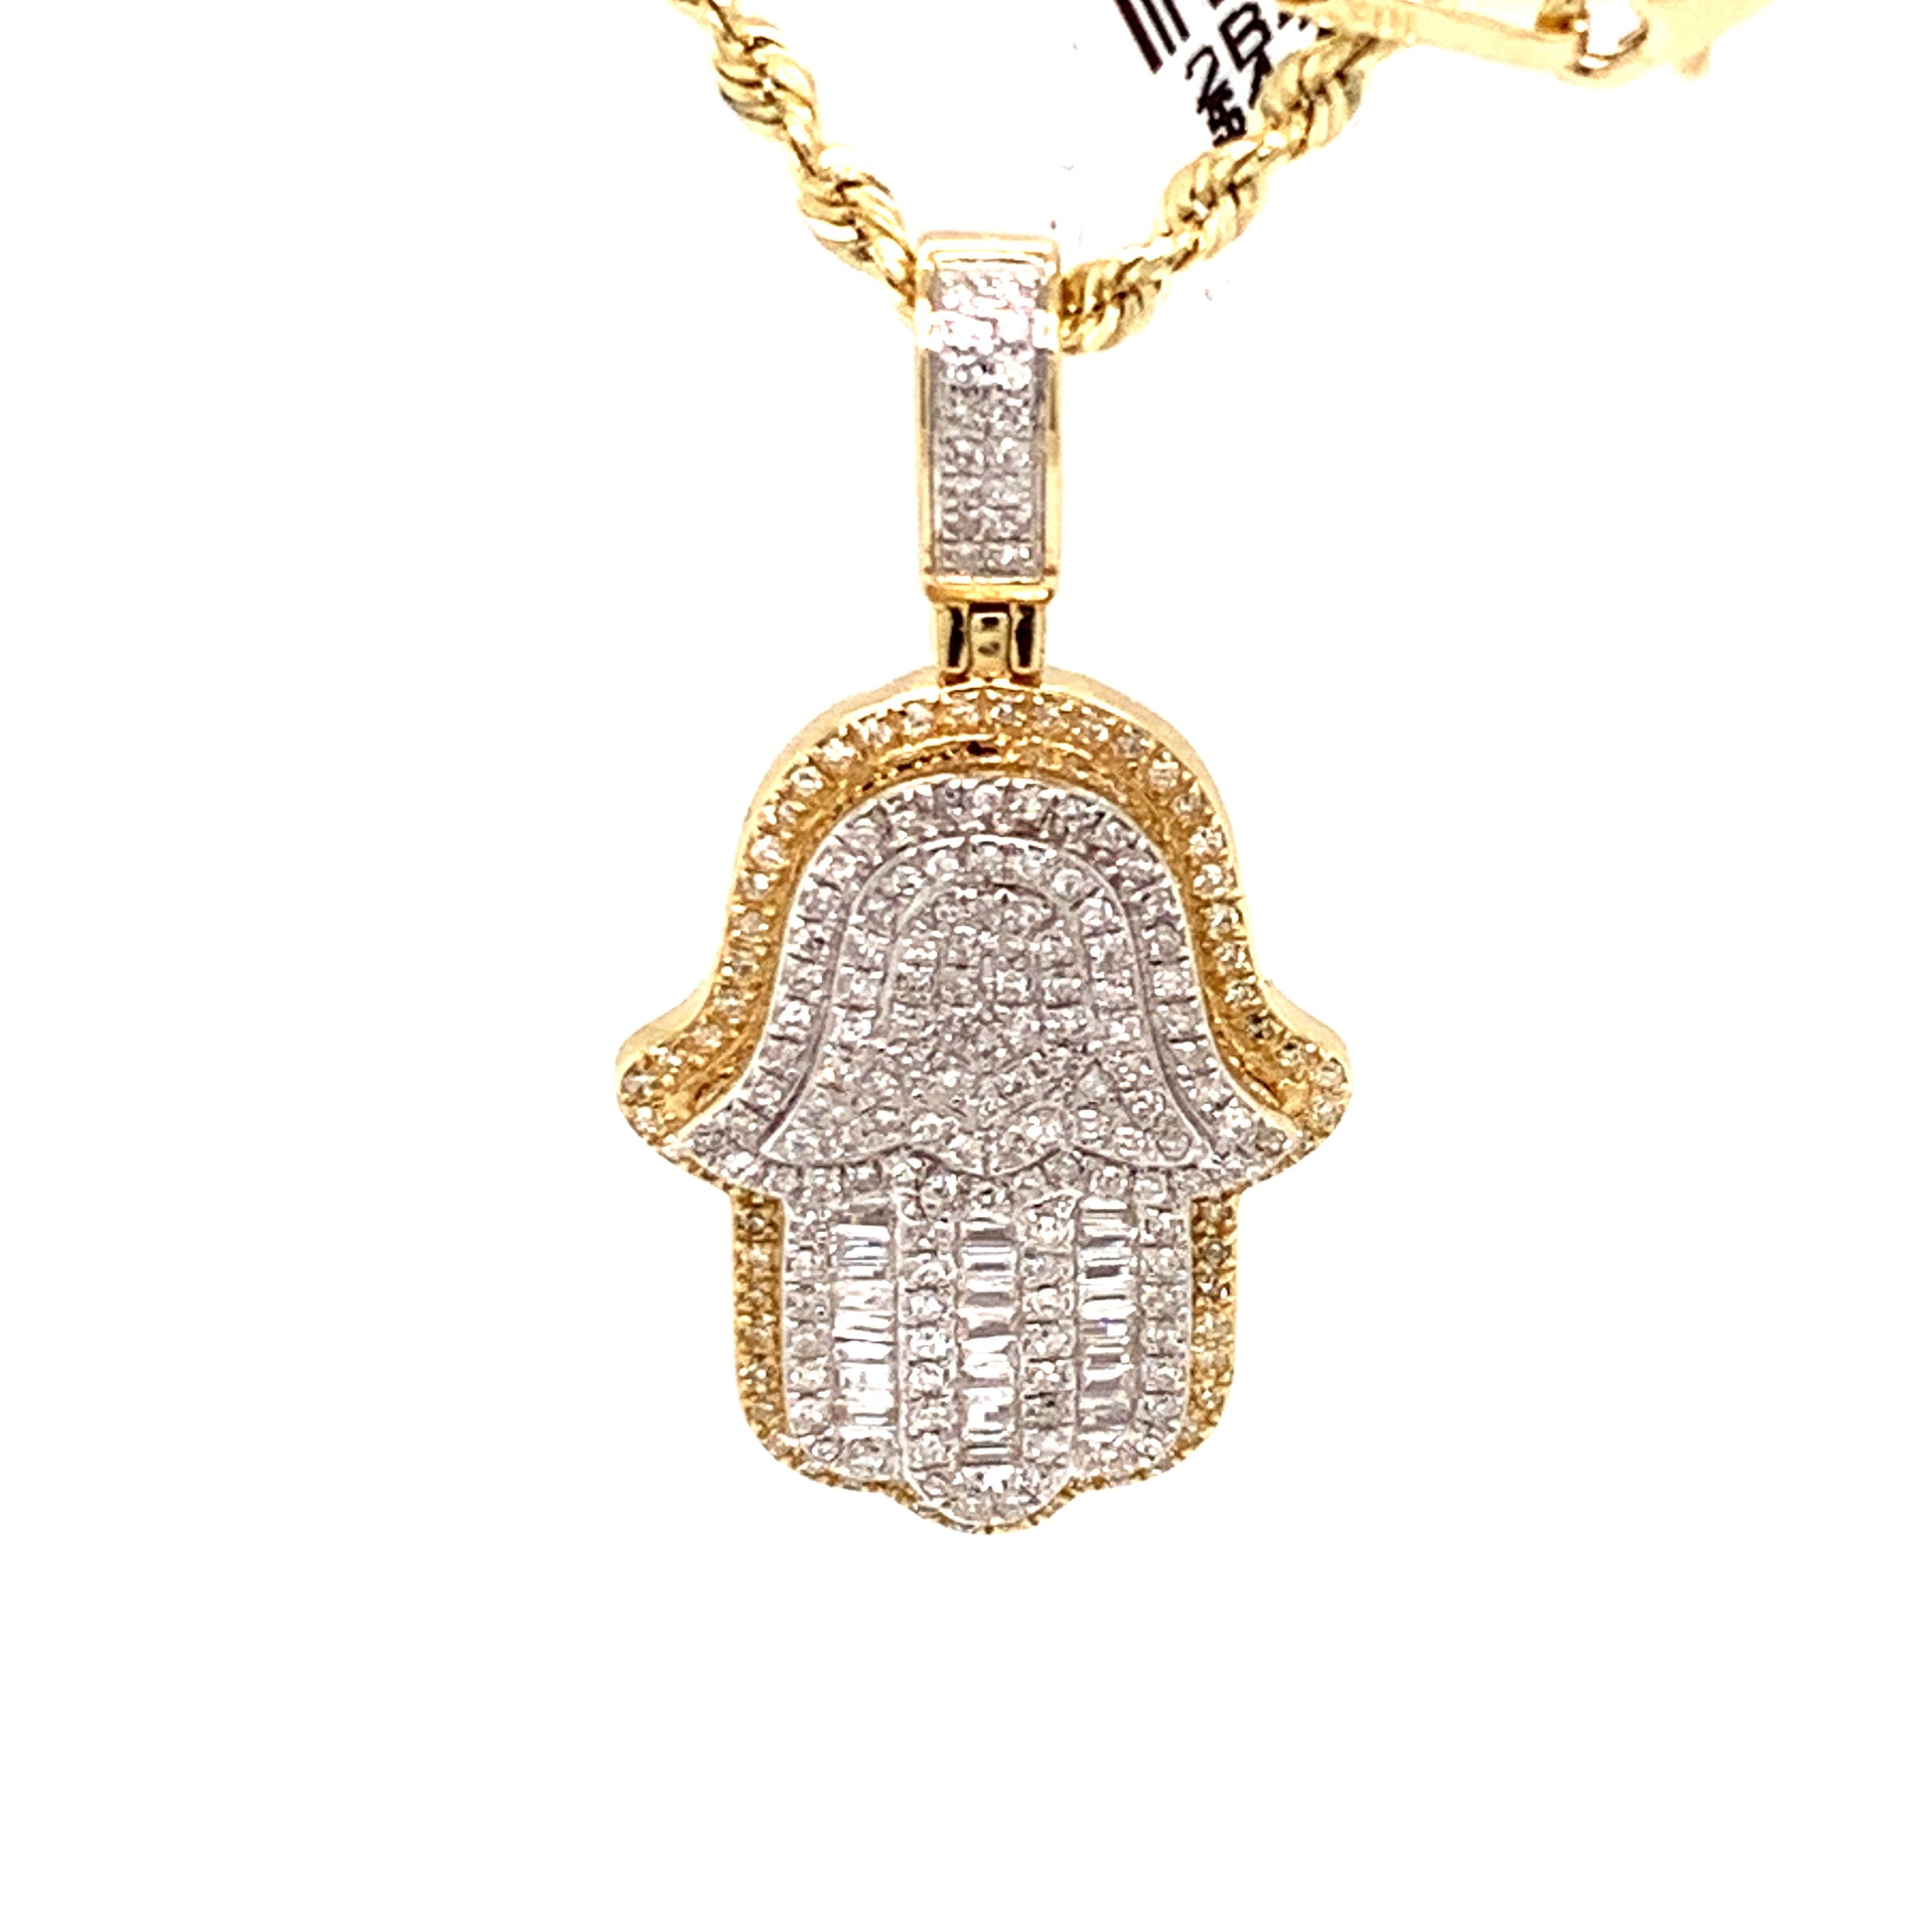 10k Yellow Gold and diamond Hamsa Pendant with chain